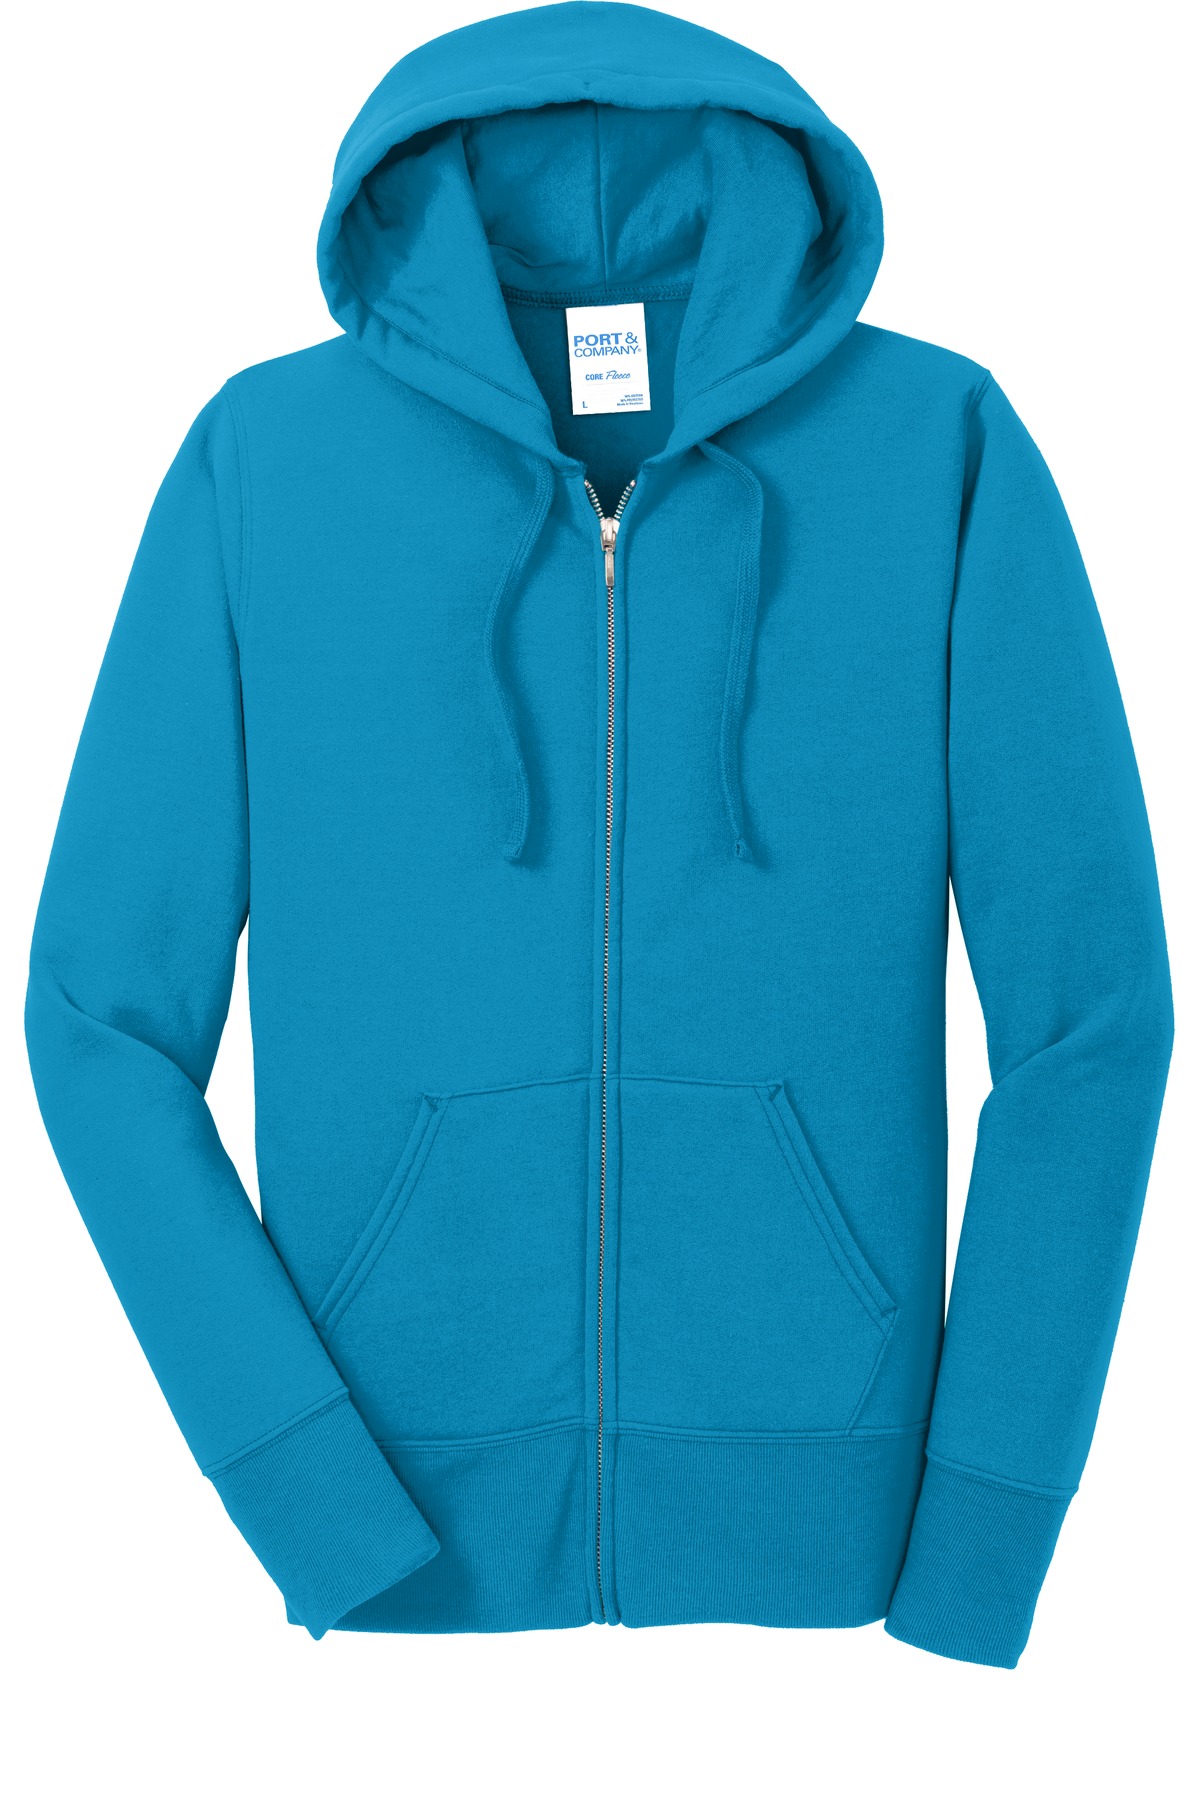 Port & Company Ladies Core Fleece Full Zip Hooded Sweatshirt-2XL (Neon Blue) - image 5 of 6